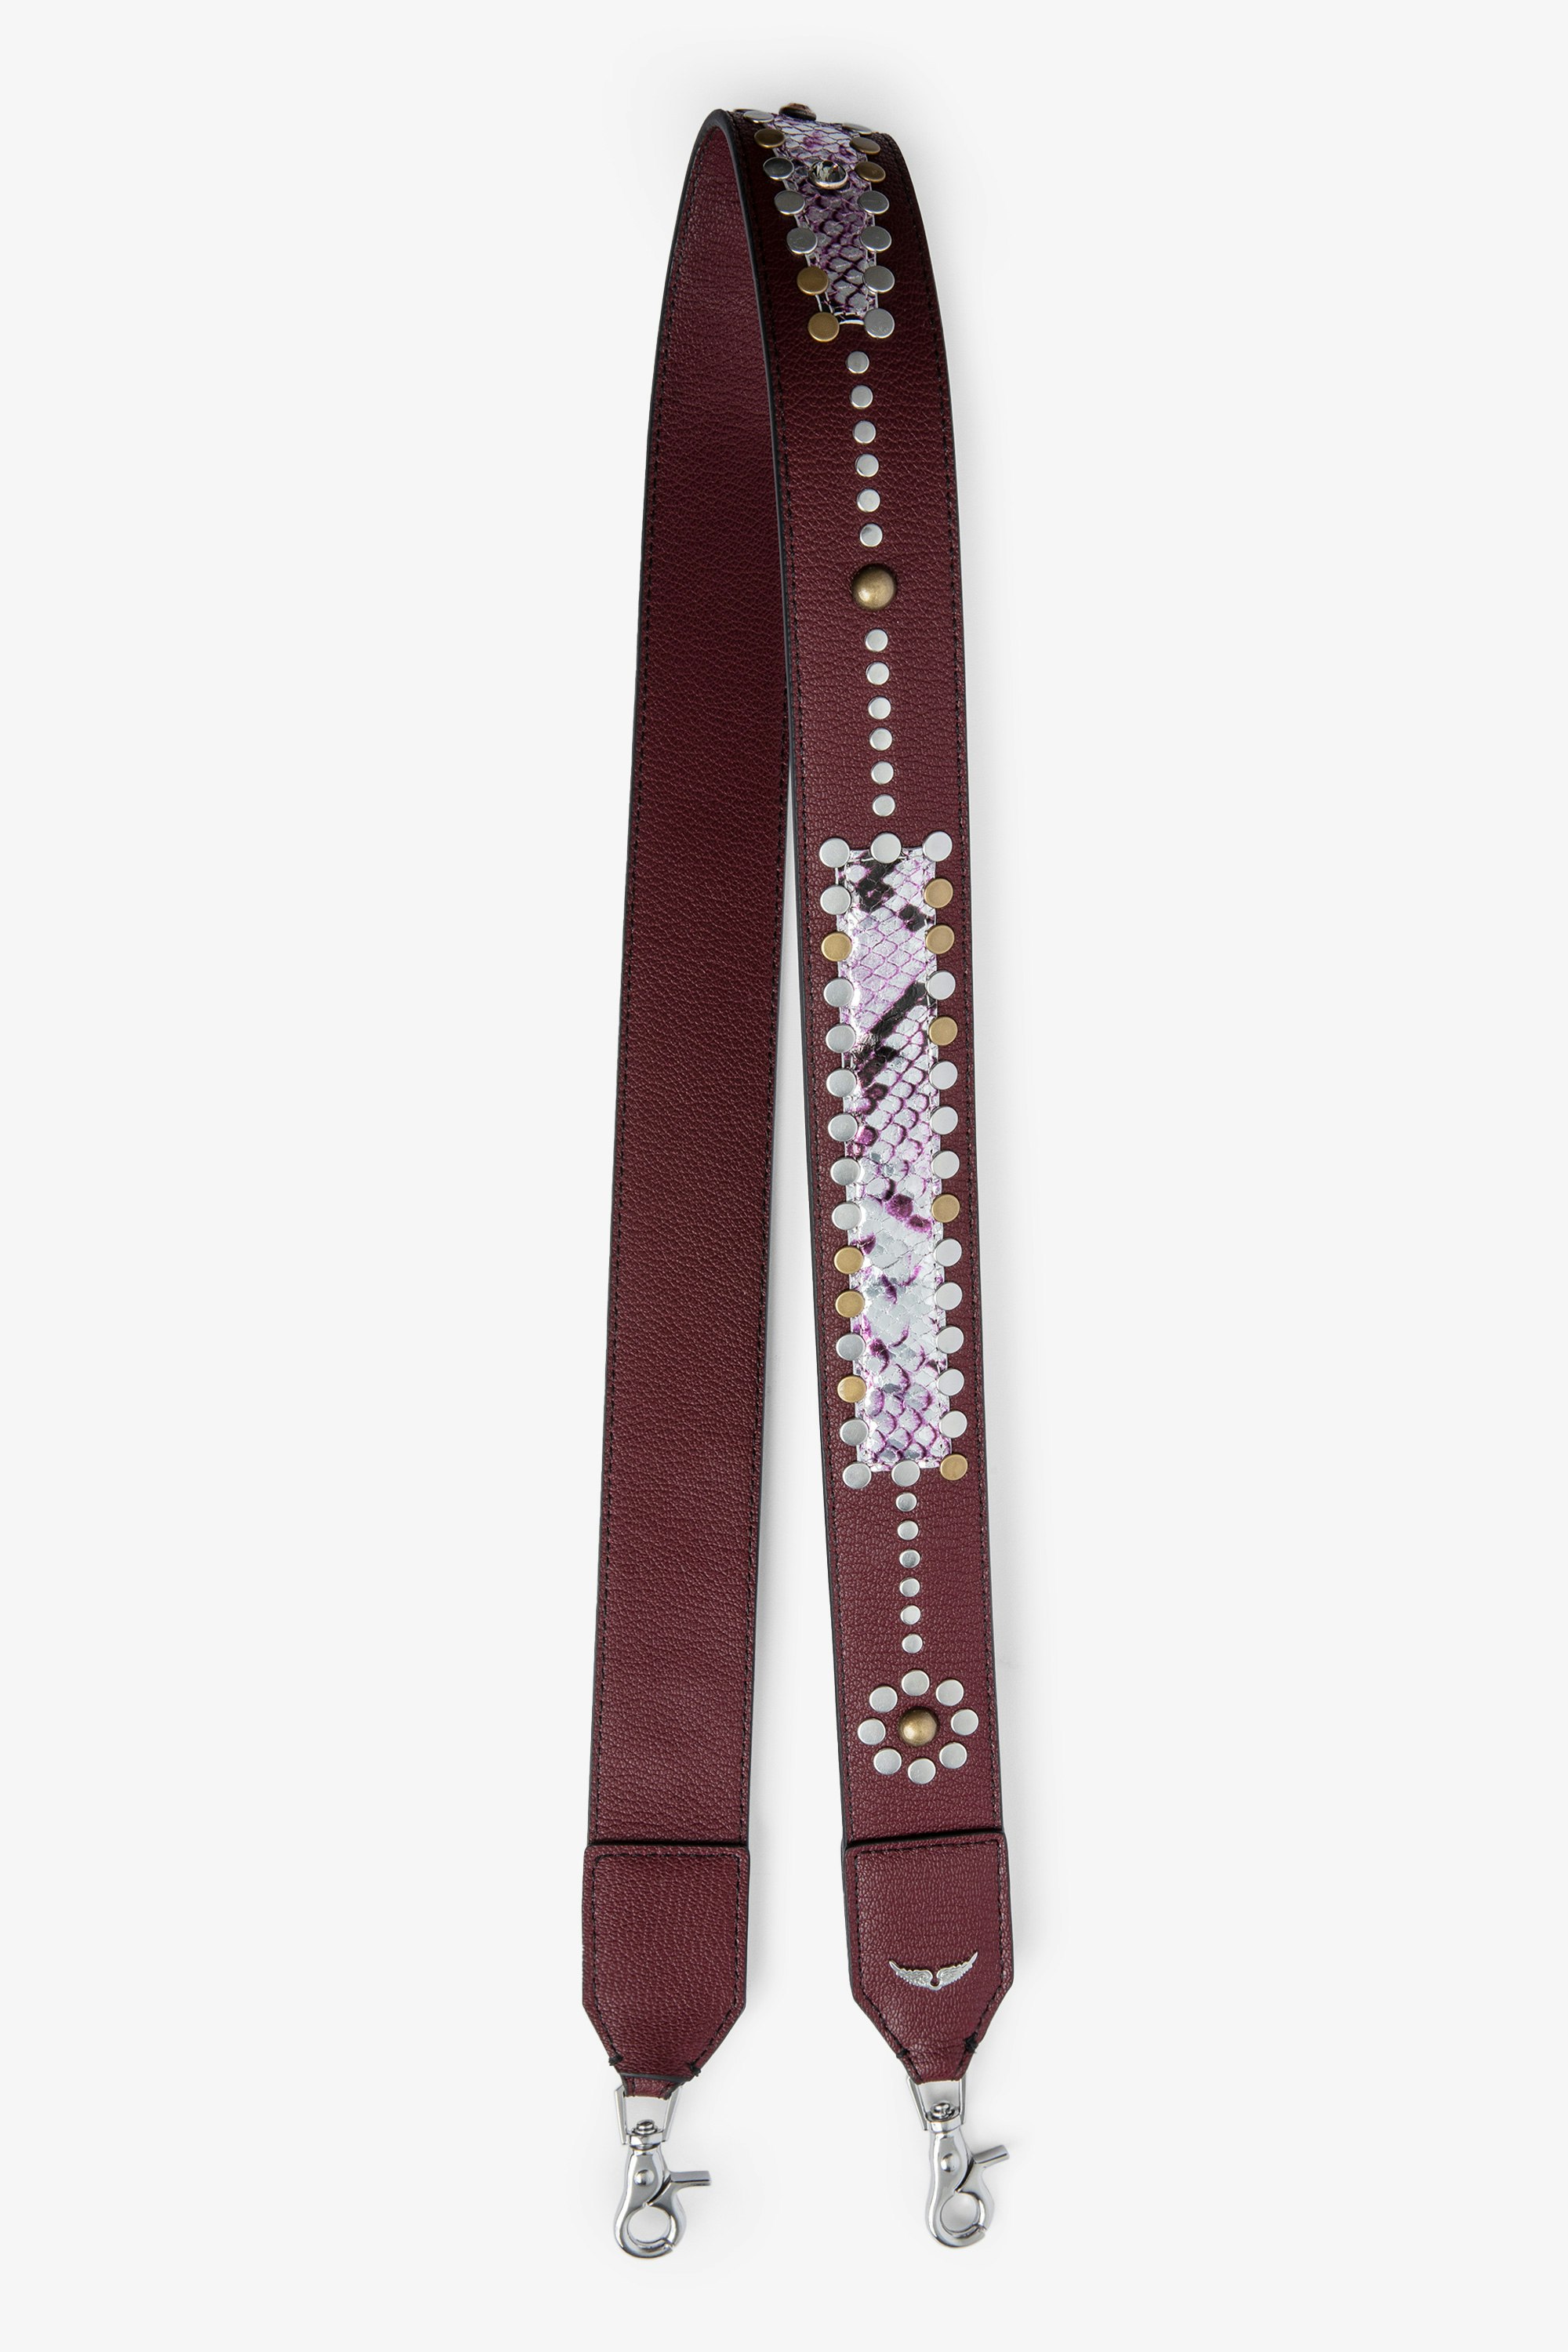 Wild Shoulder Strap Women’s leather shoulder strap with rivets and python-embossed panels